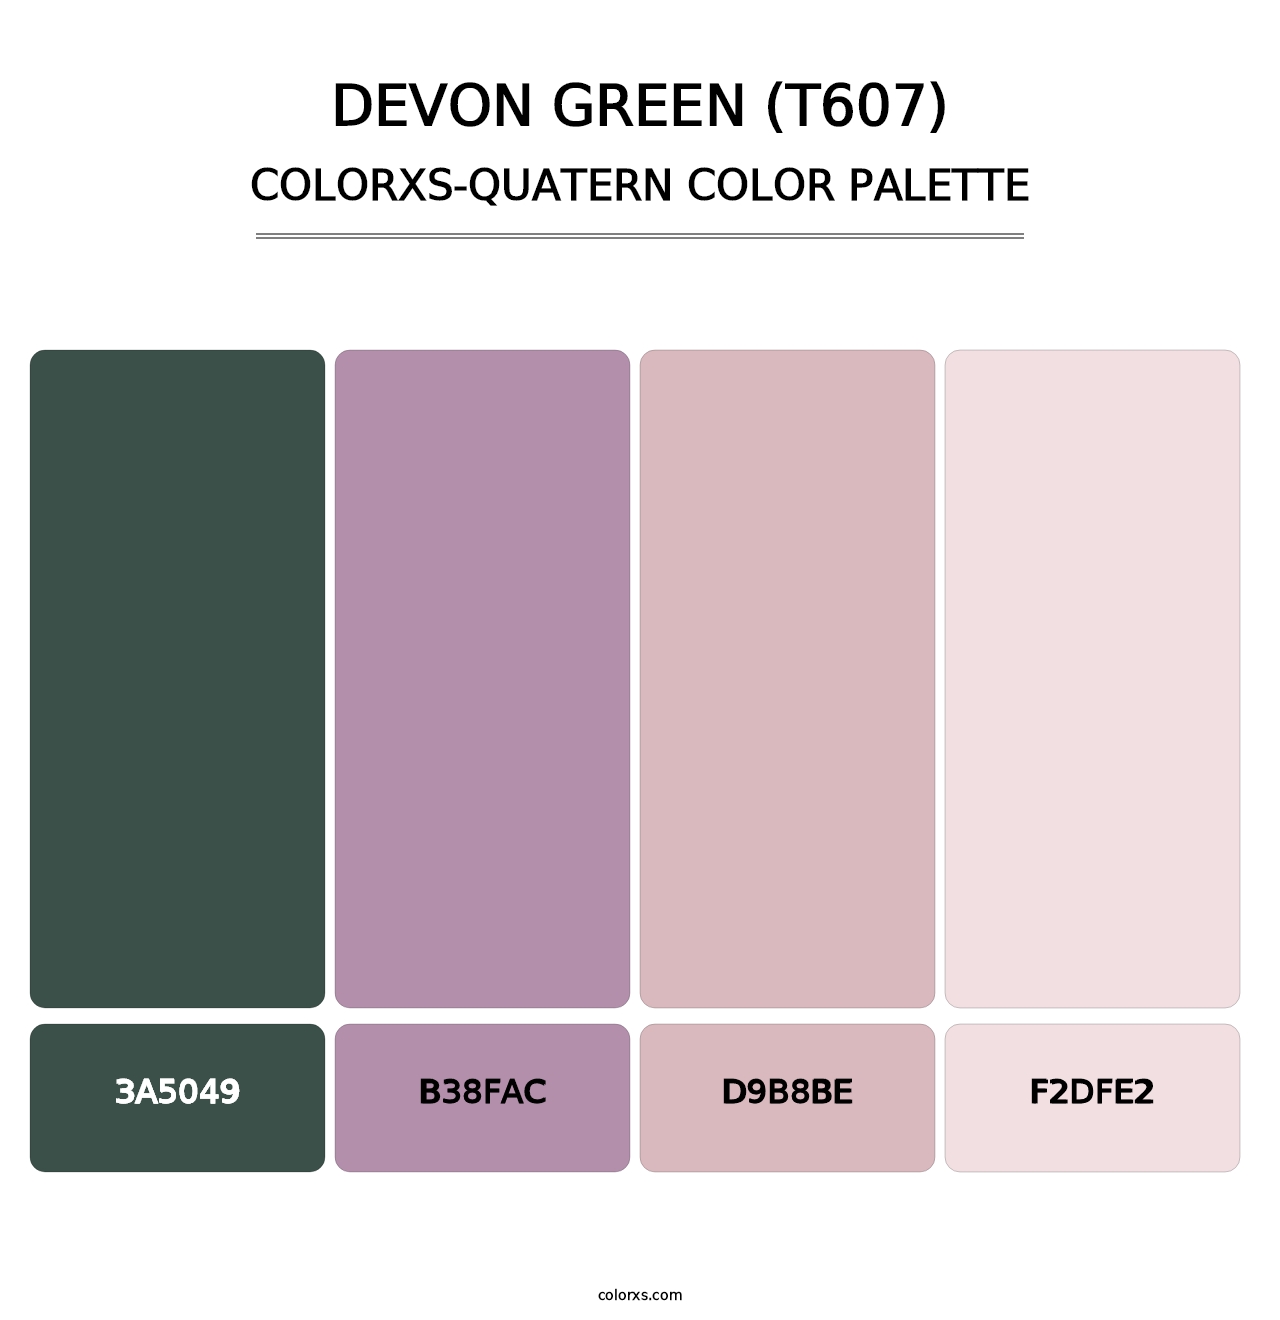 Devon Green (T607) - Colorxs Quatern Palette